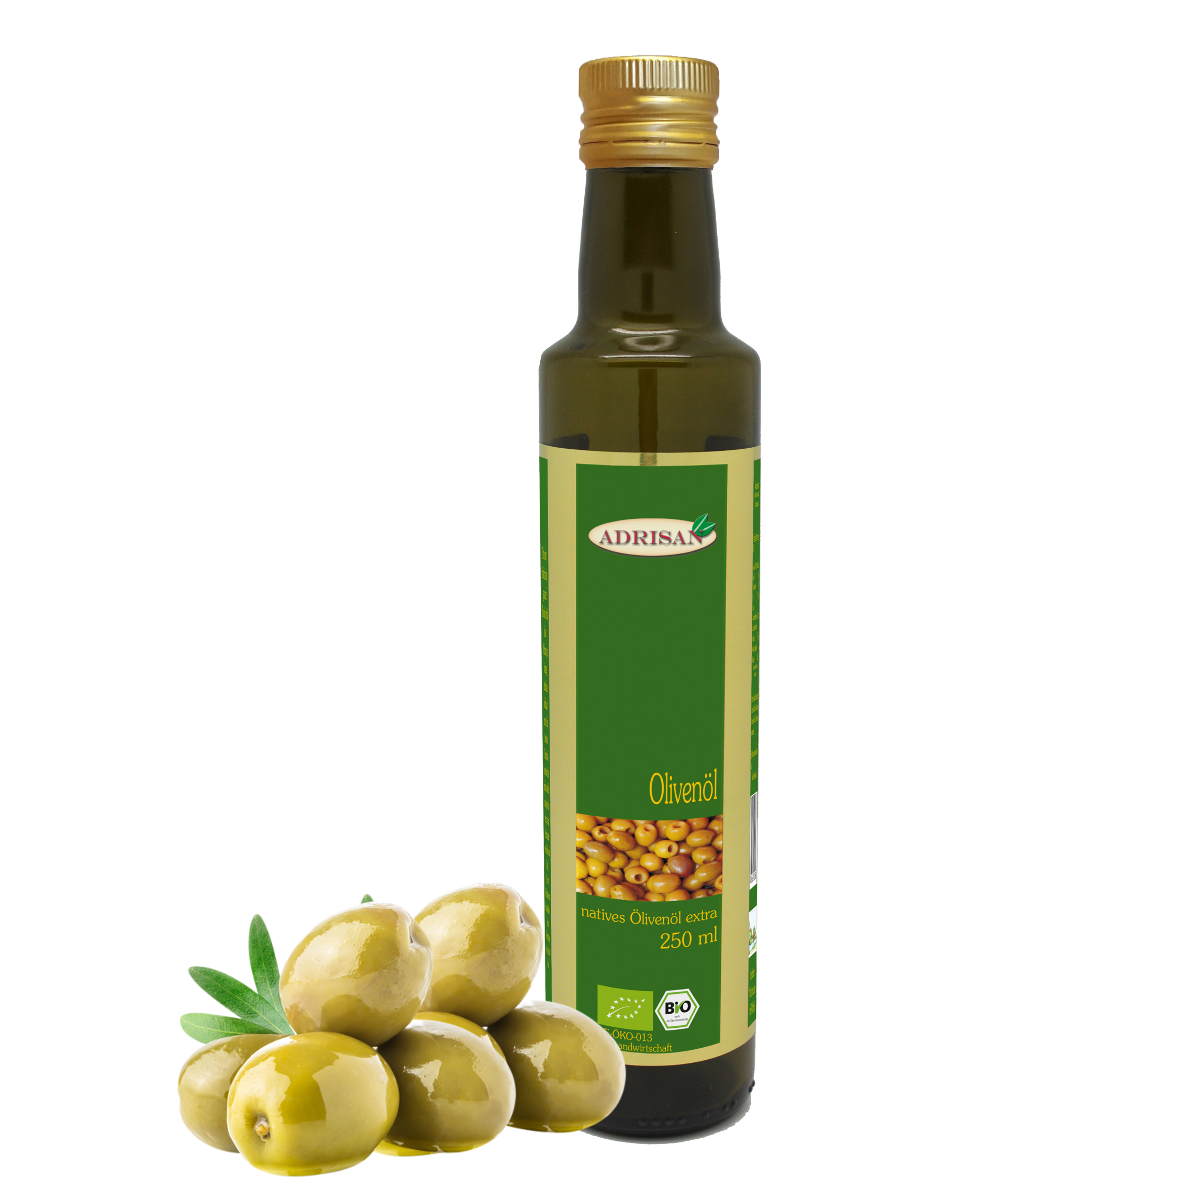 Adrisan Olivenöl extra nativ bio* 250 ml